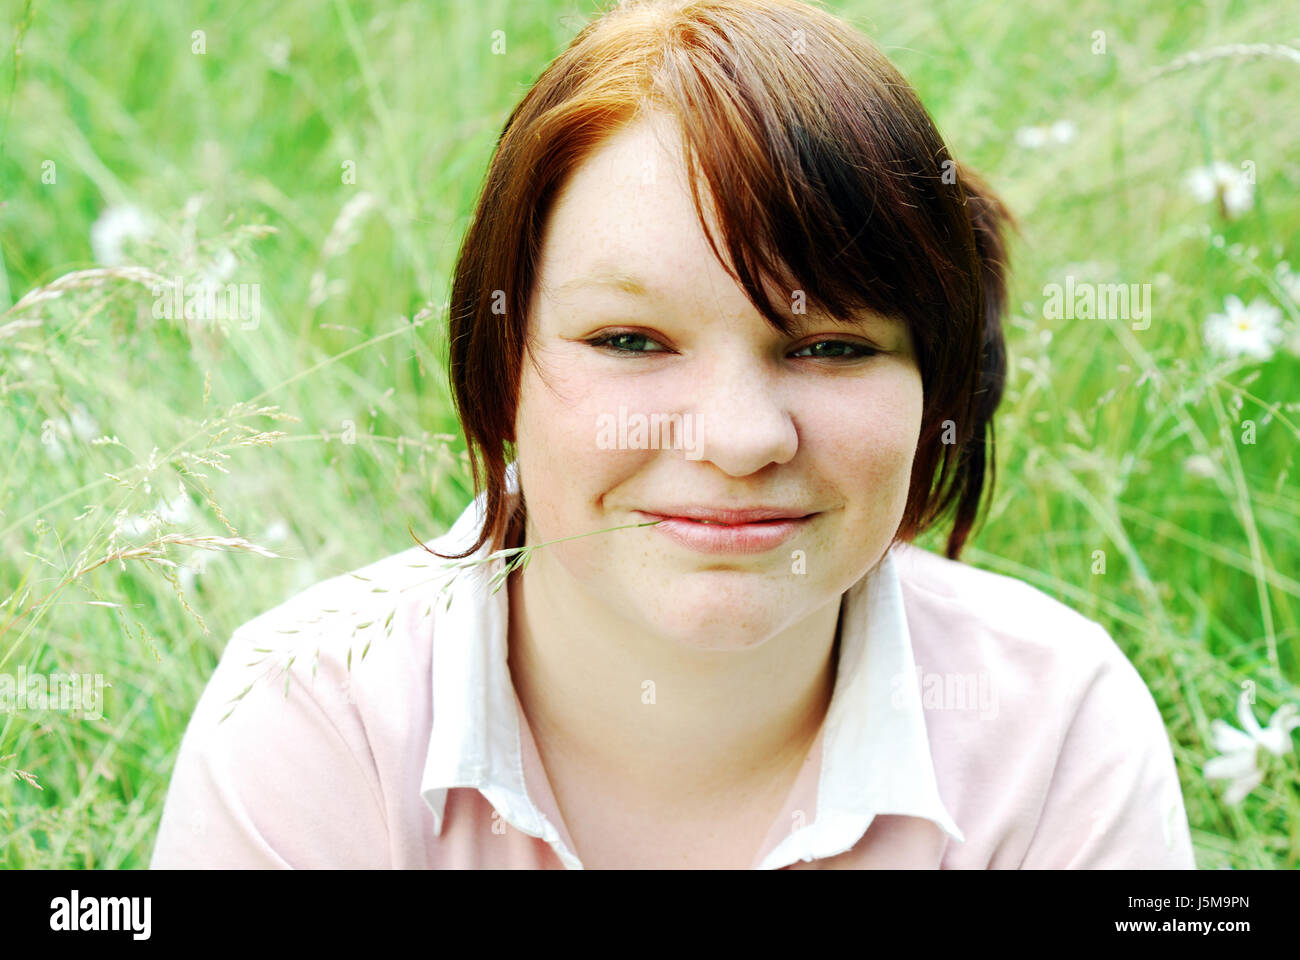 teenager portrait Stock Photo